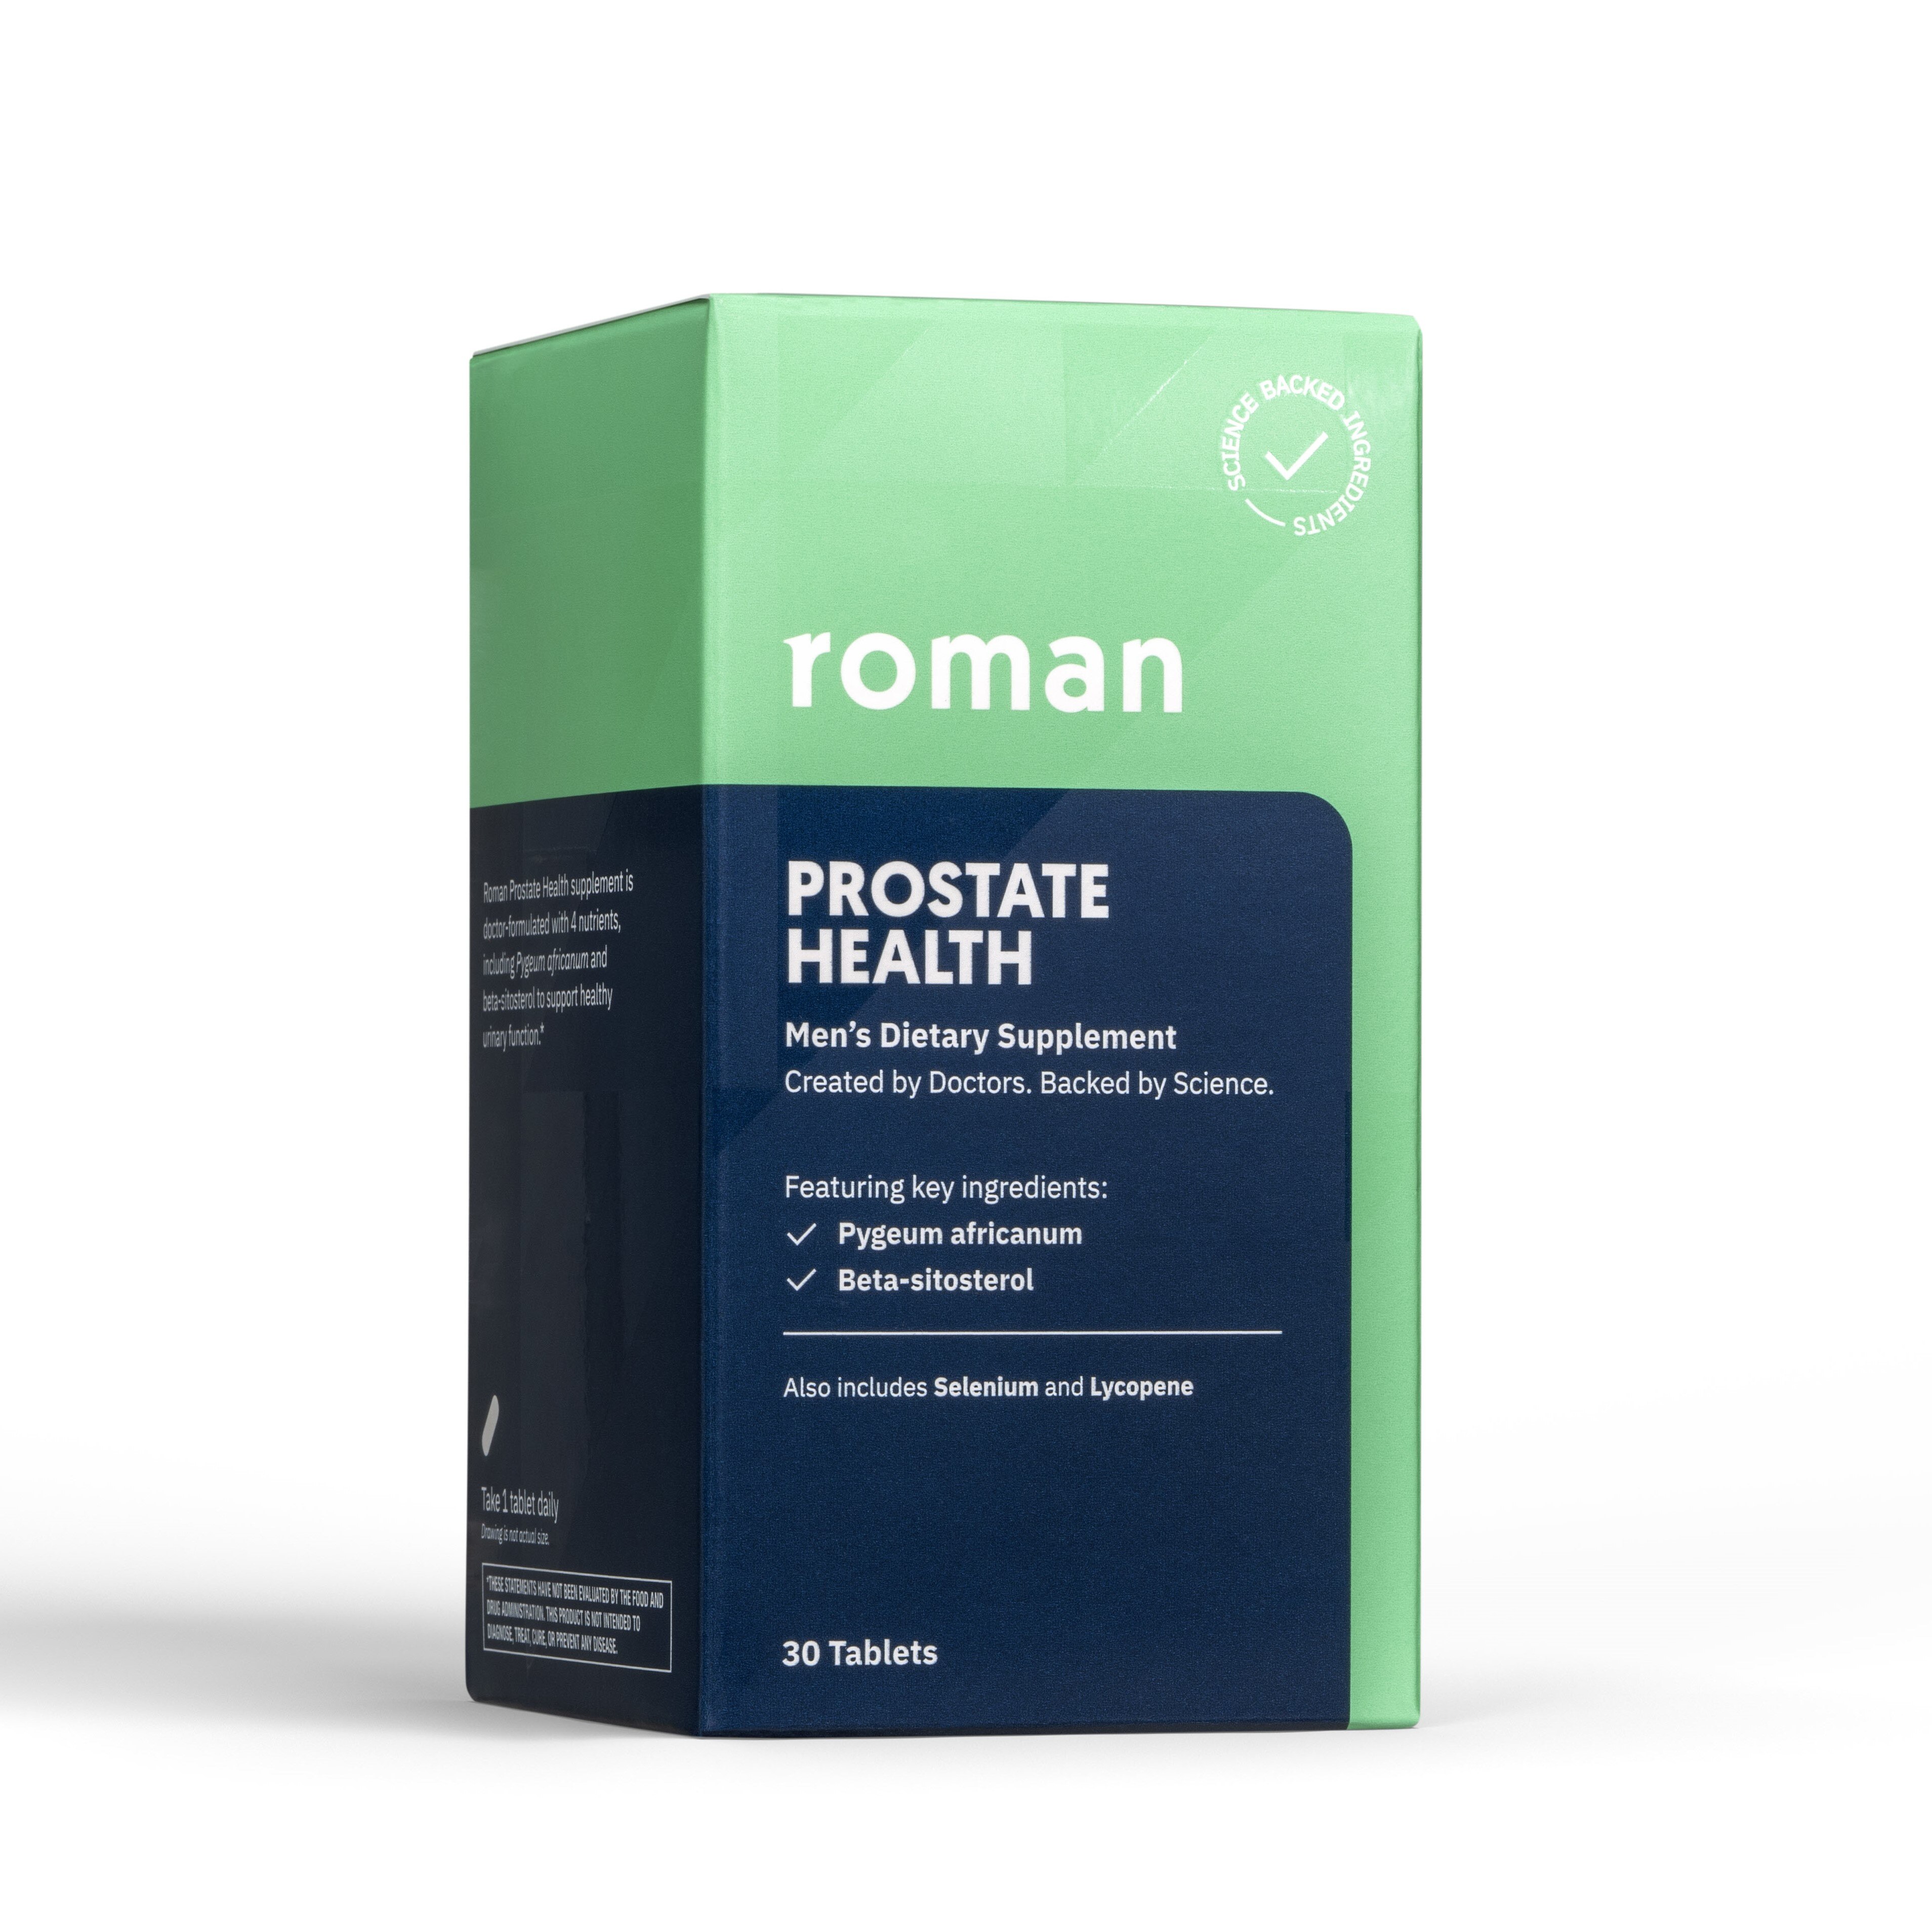 Roman Prostate Health Supplement, 30 Day Supply, 30CT